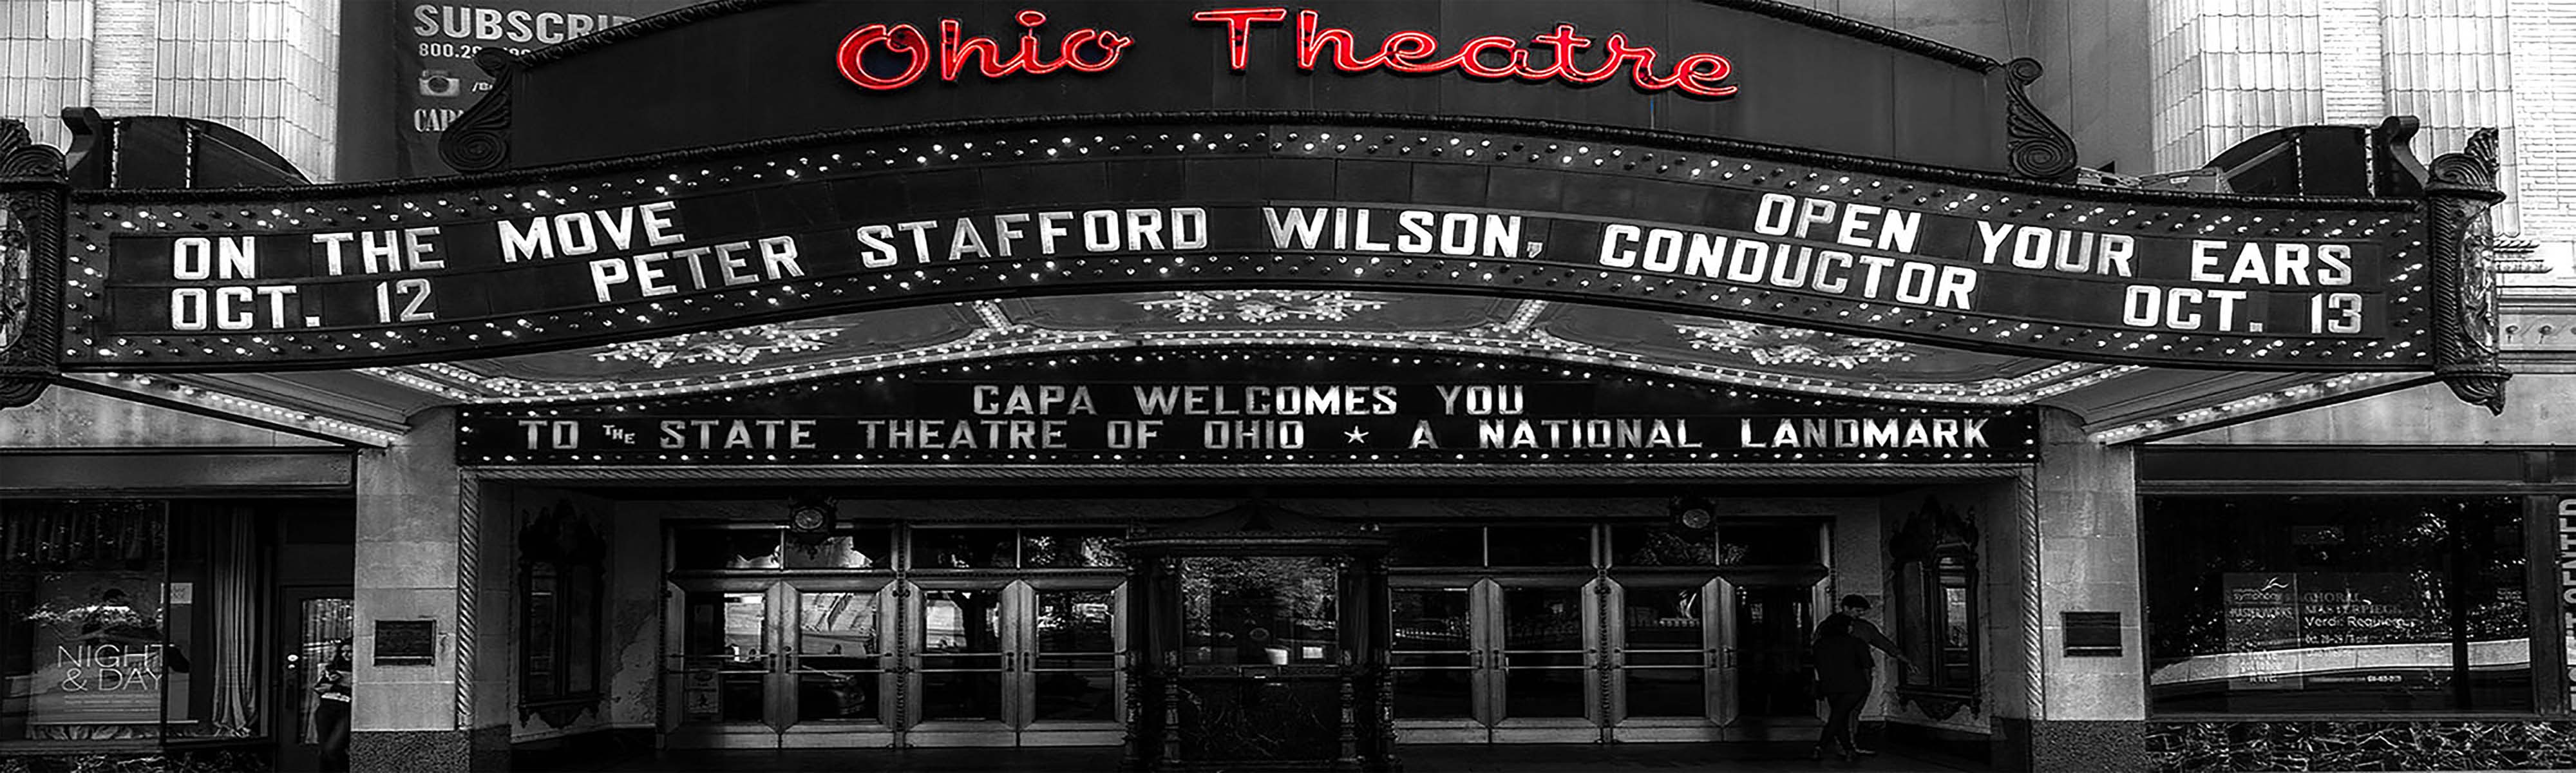 Weltberühmtes Theater Ohio Theatre in Amerika